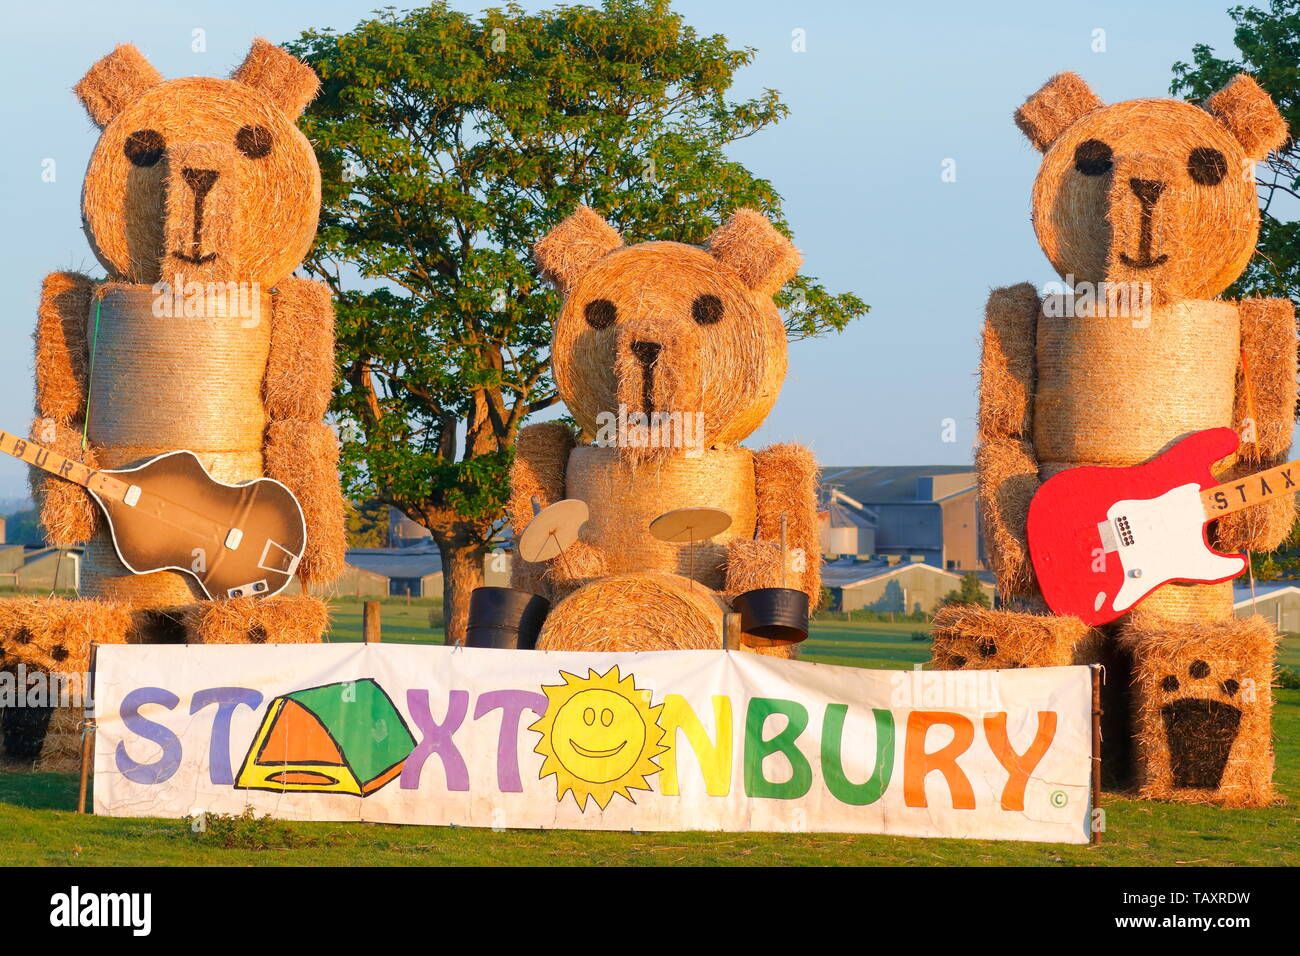 Una escultura de un oso de peluche band , creado para anunciar Staxtonbury music festival, cerca de Scarborough Foto de stock